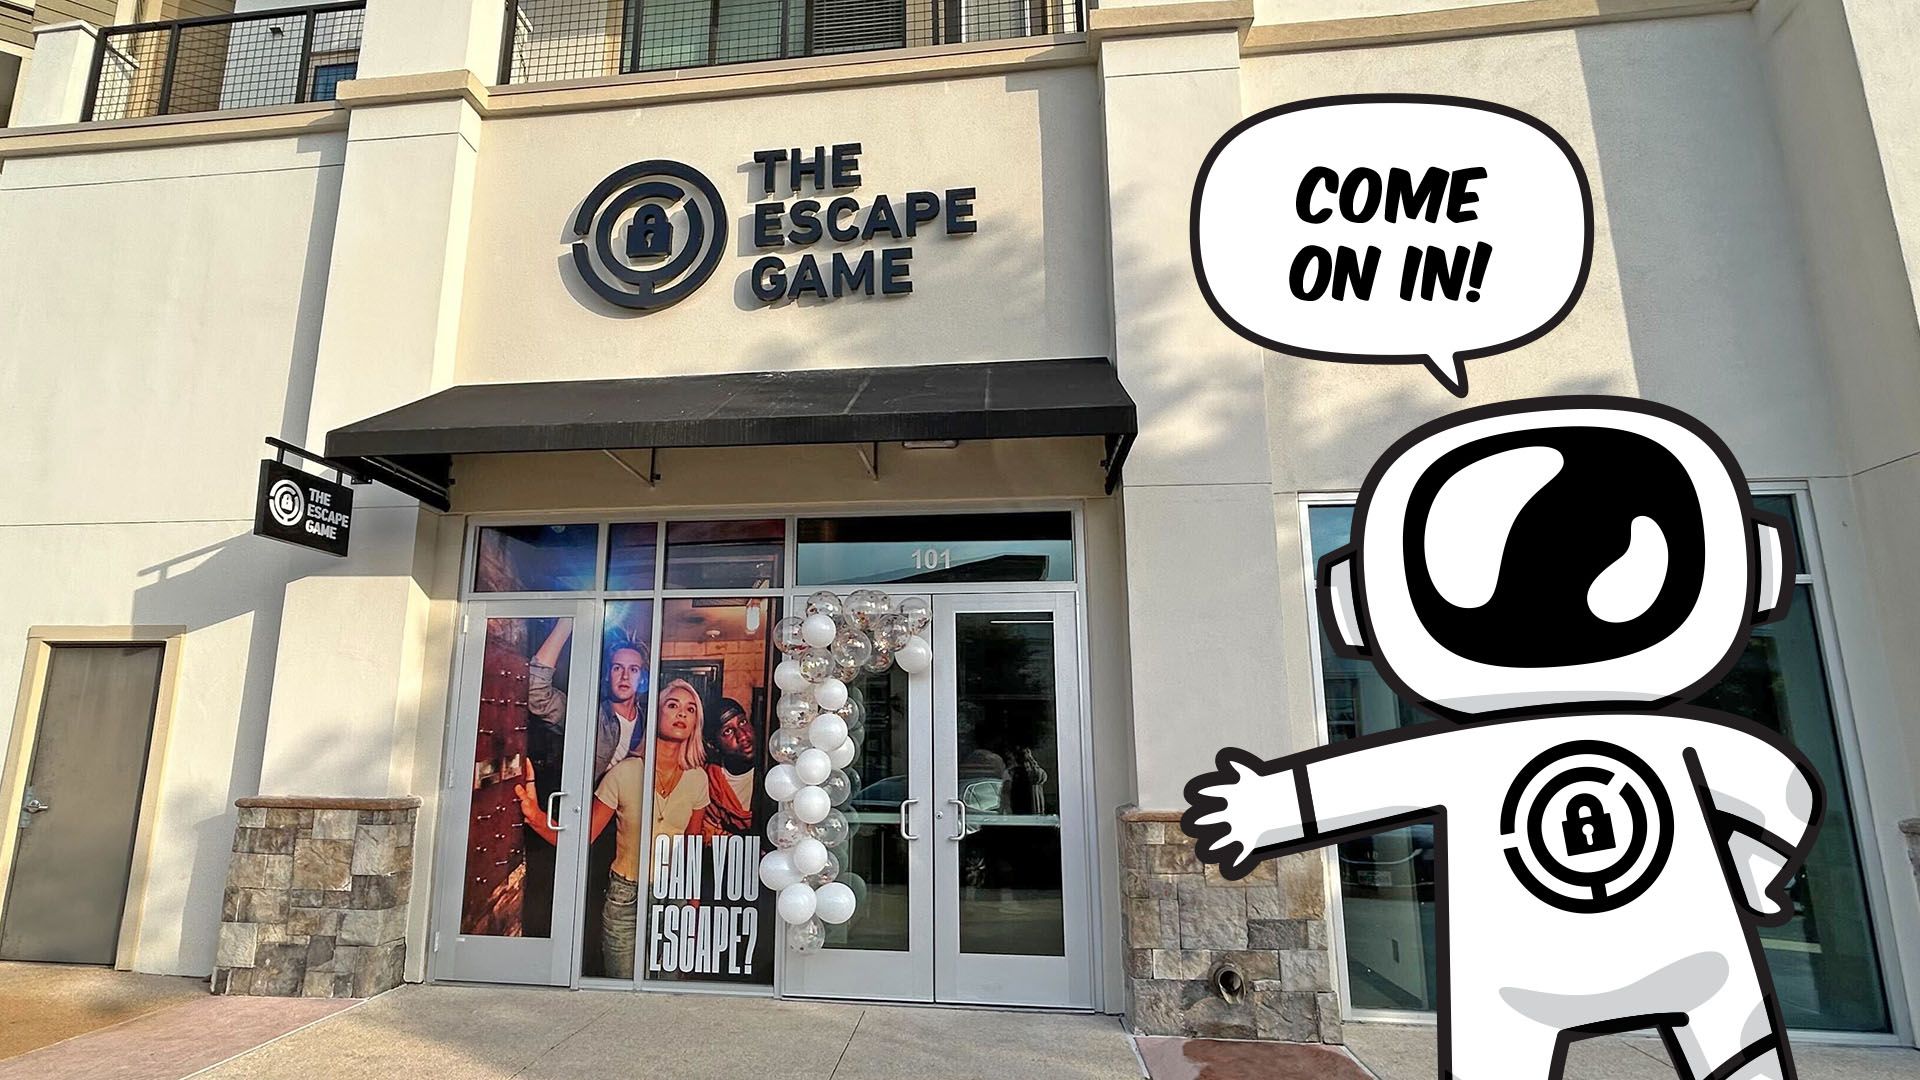 San Antonio: The Escape Game e escolha de 5 salas diferentes